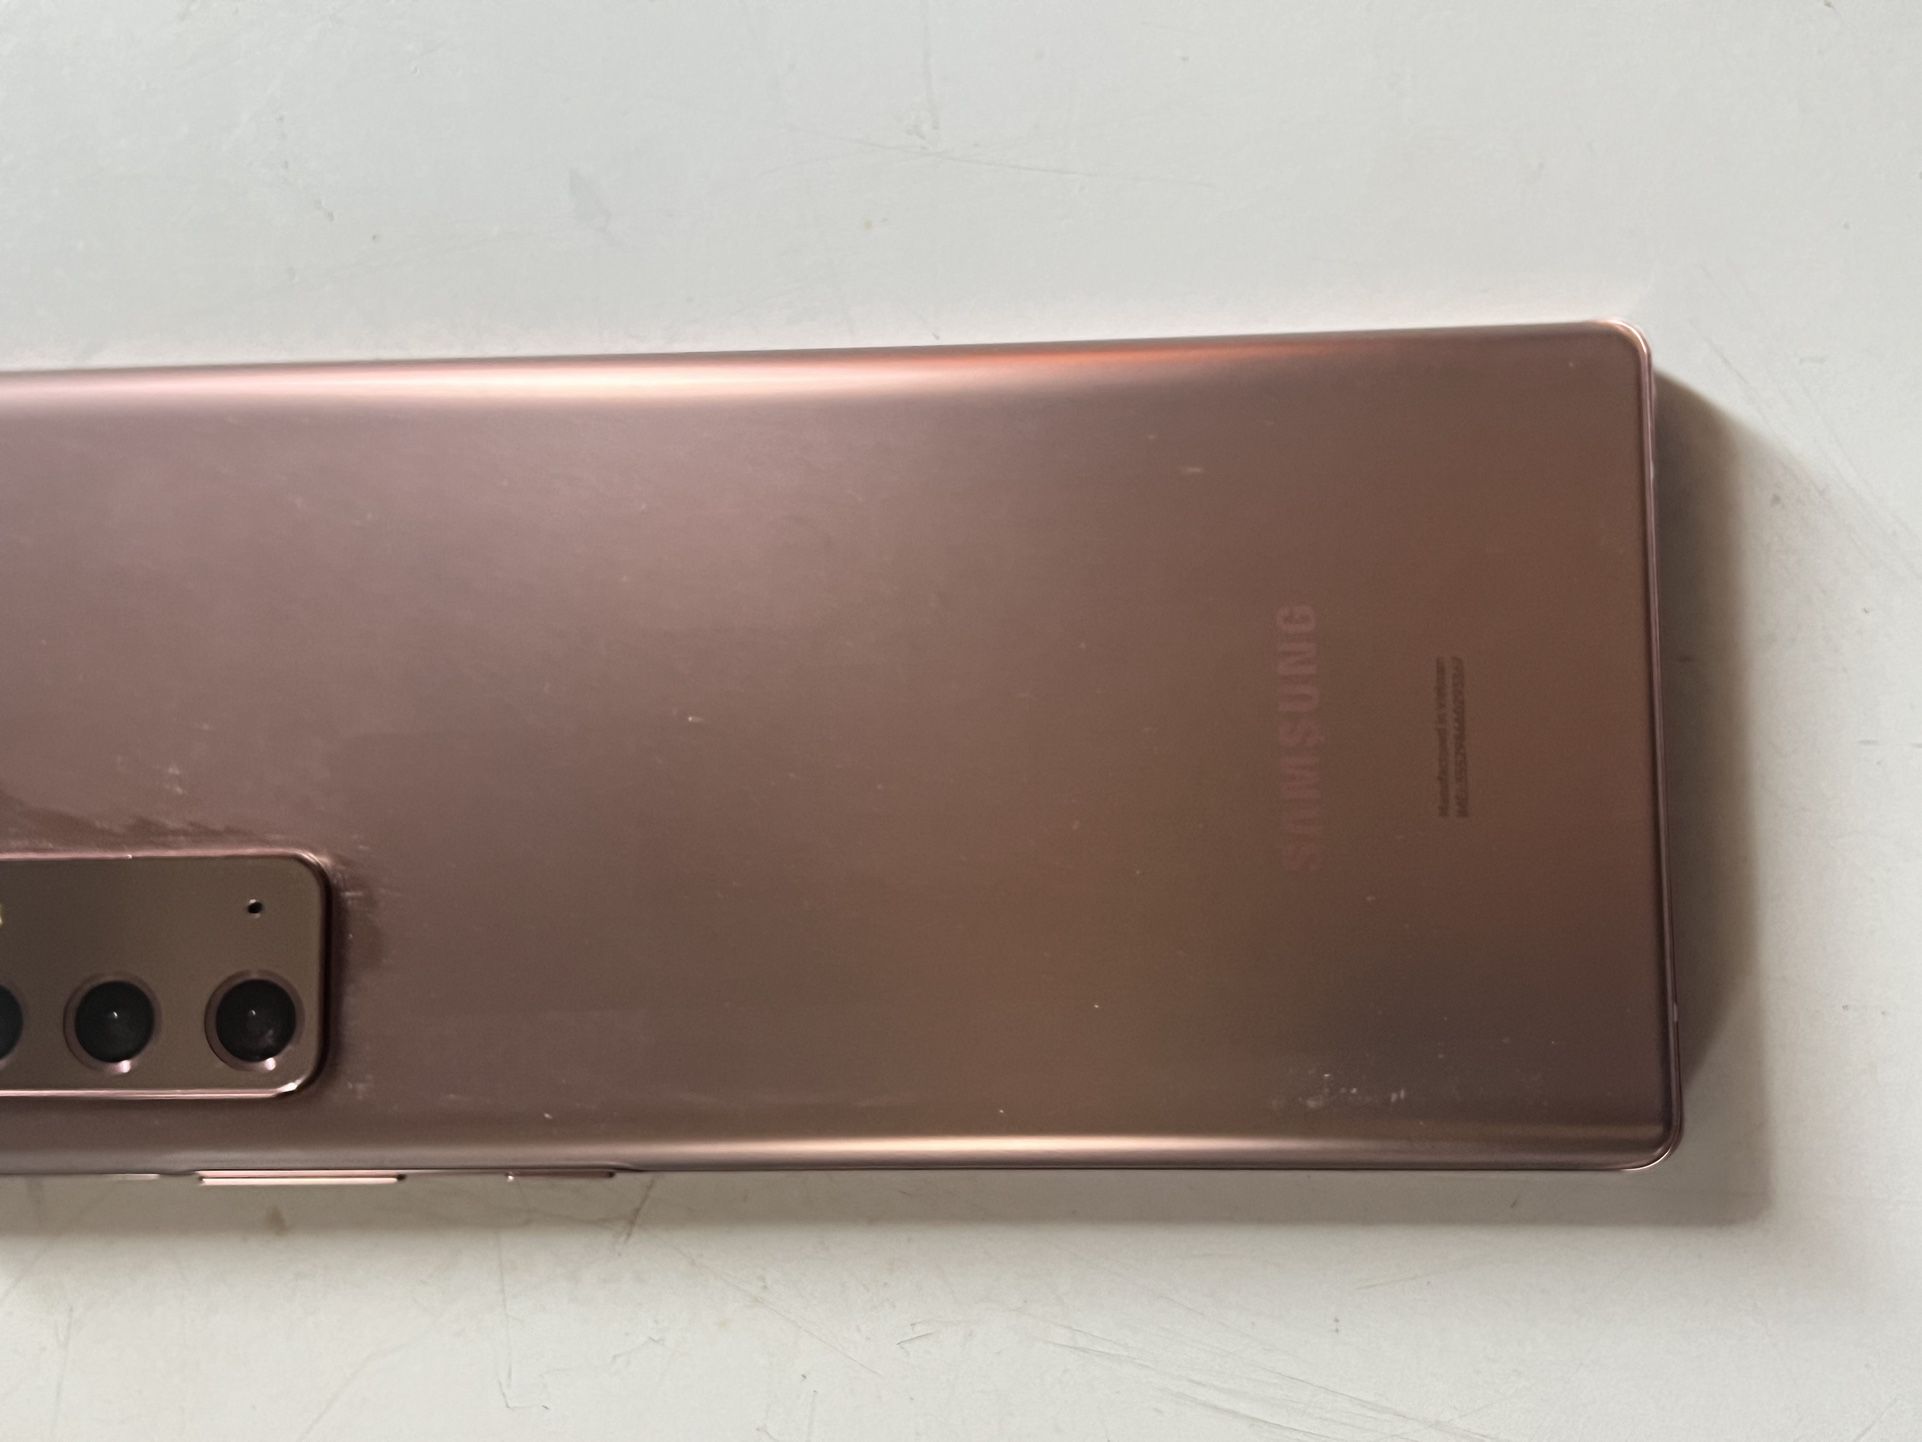 Samsung Galaxy Note 20 127GB Used Unlocked Good Condition 